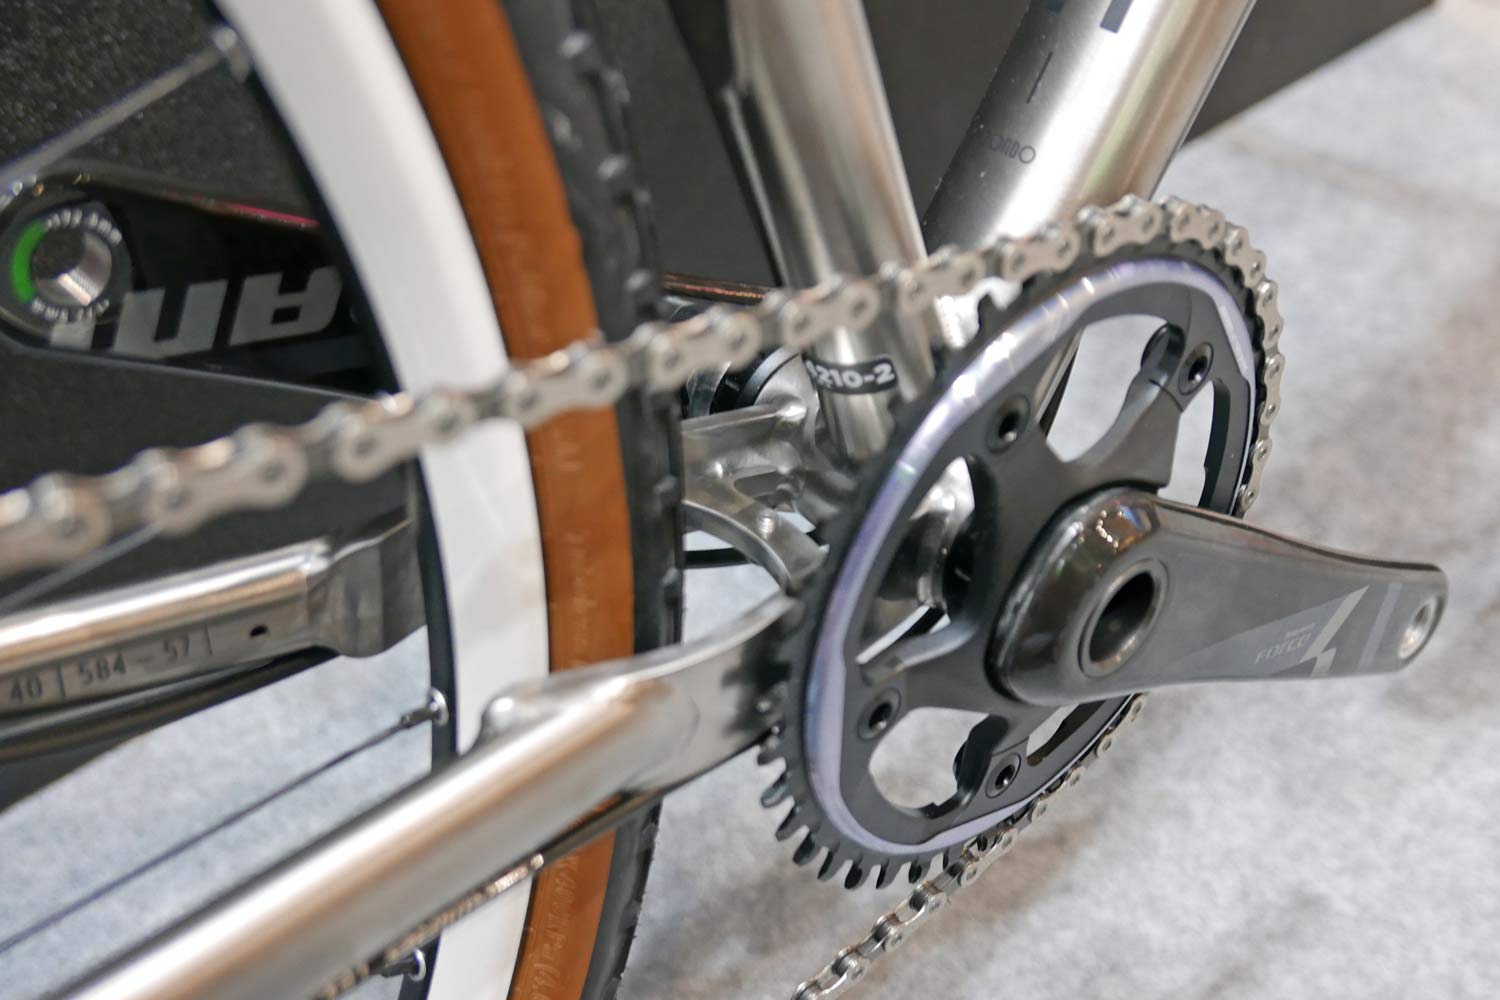 Rondo Ruut Ti adjustable geometry titanium gravel bike